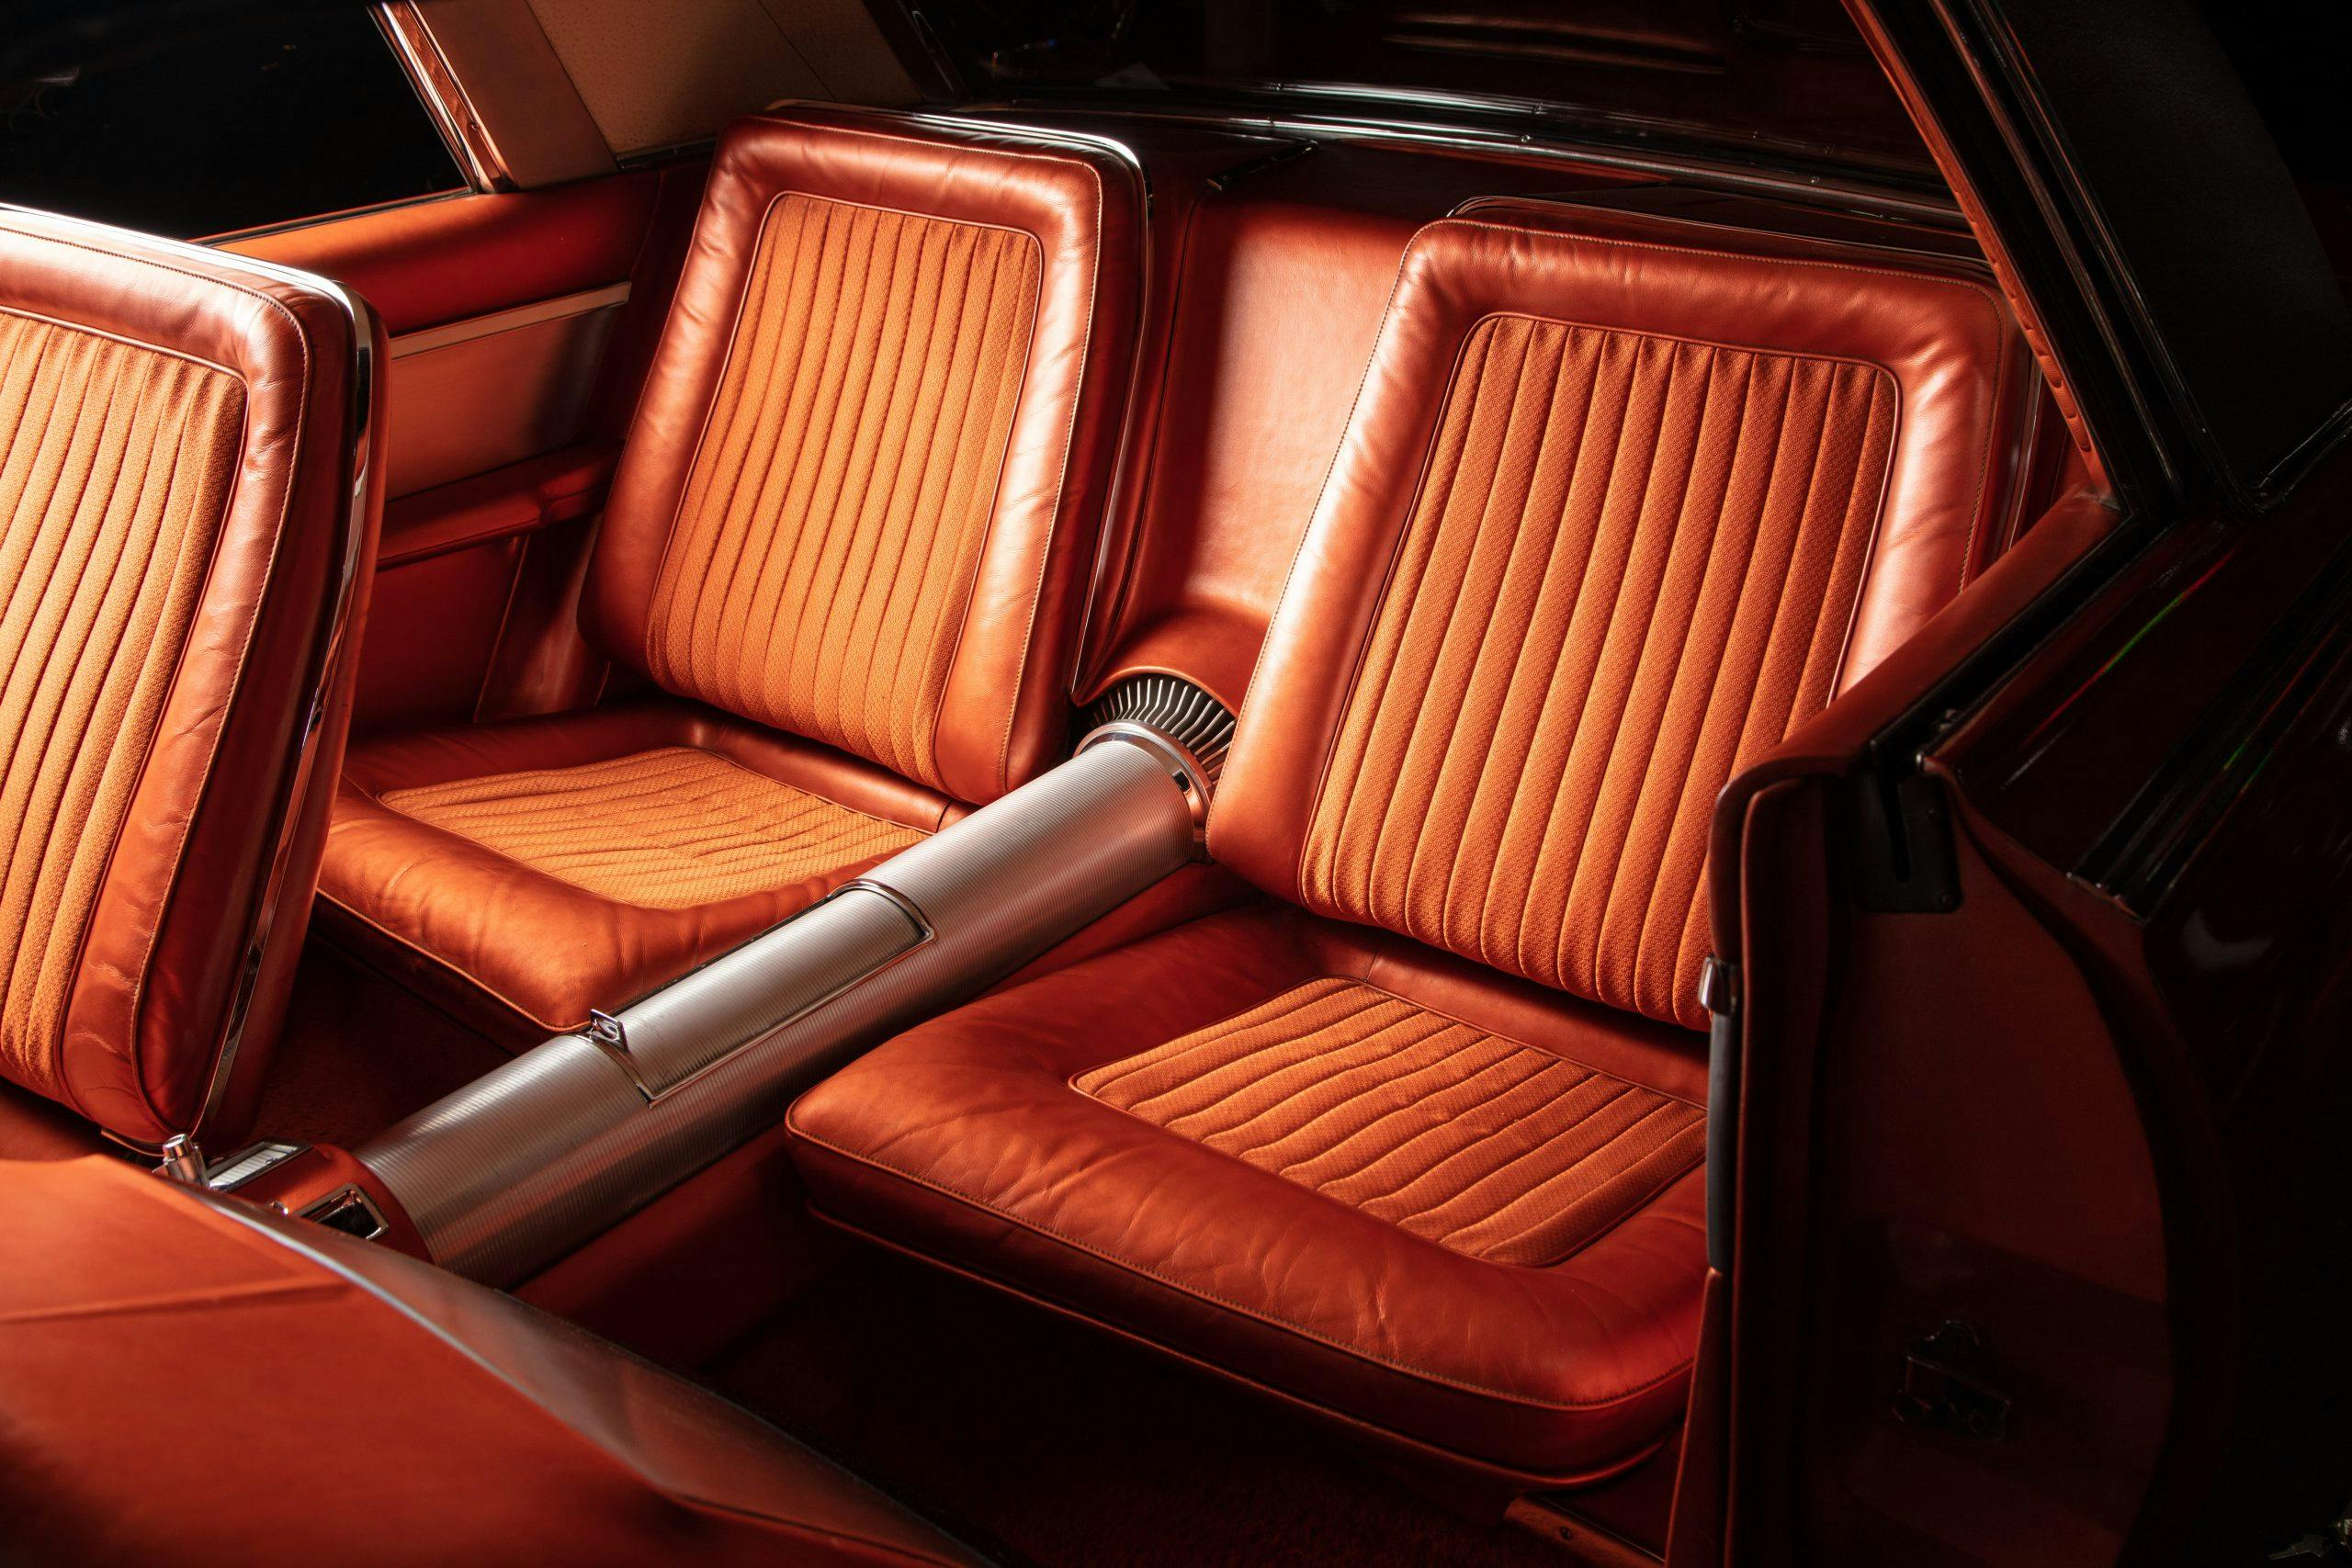 Chrysler Turbine car interior rear seats